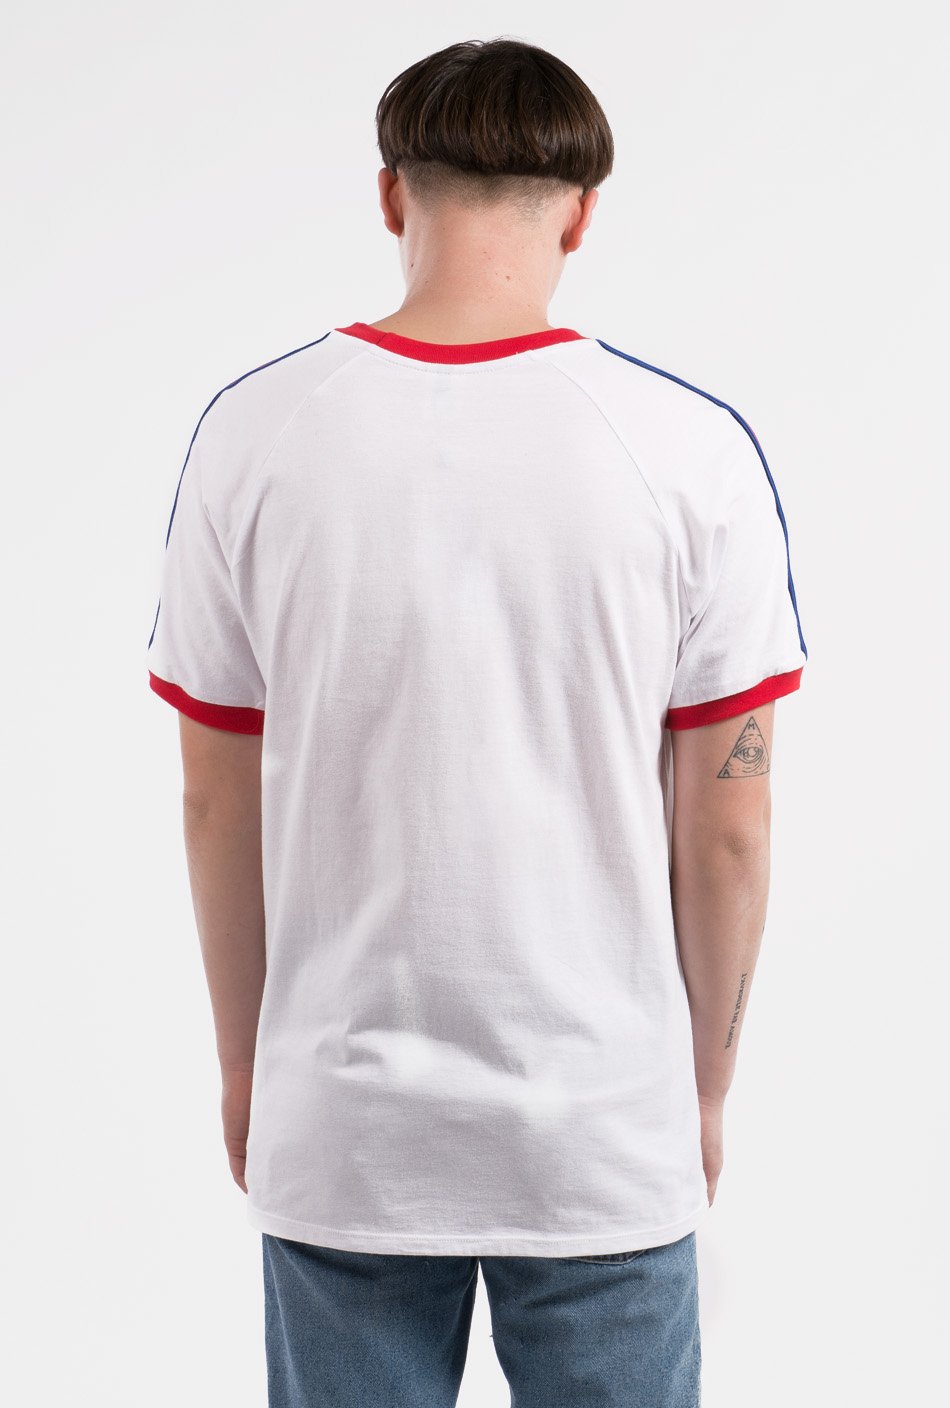 white "usa" t-shirt